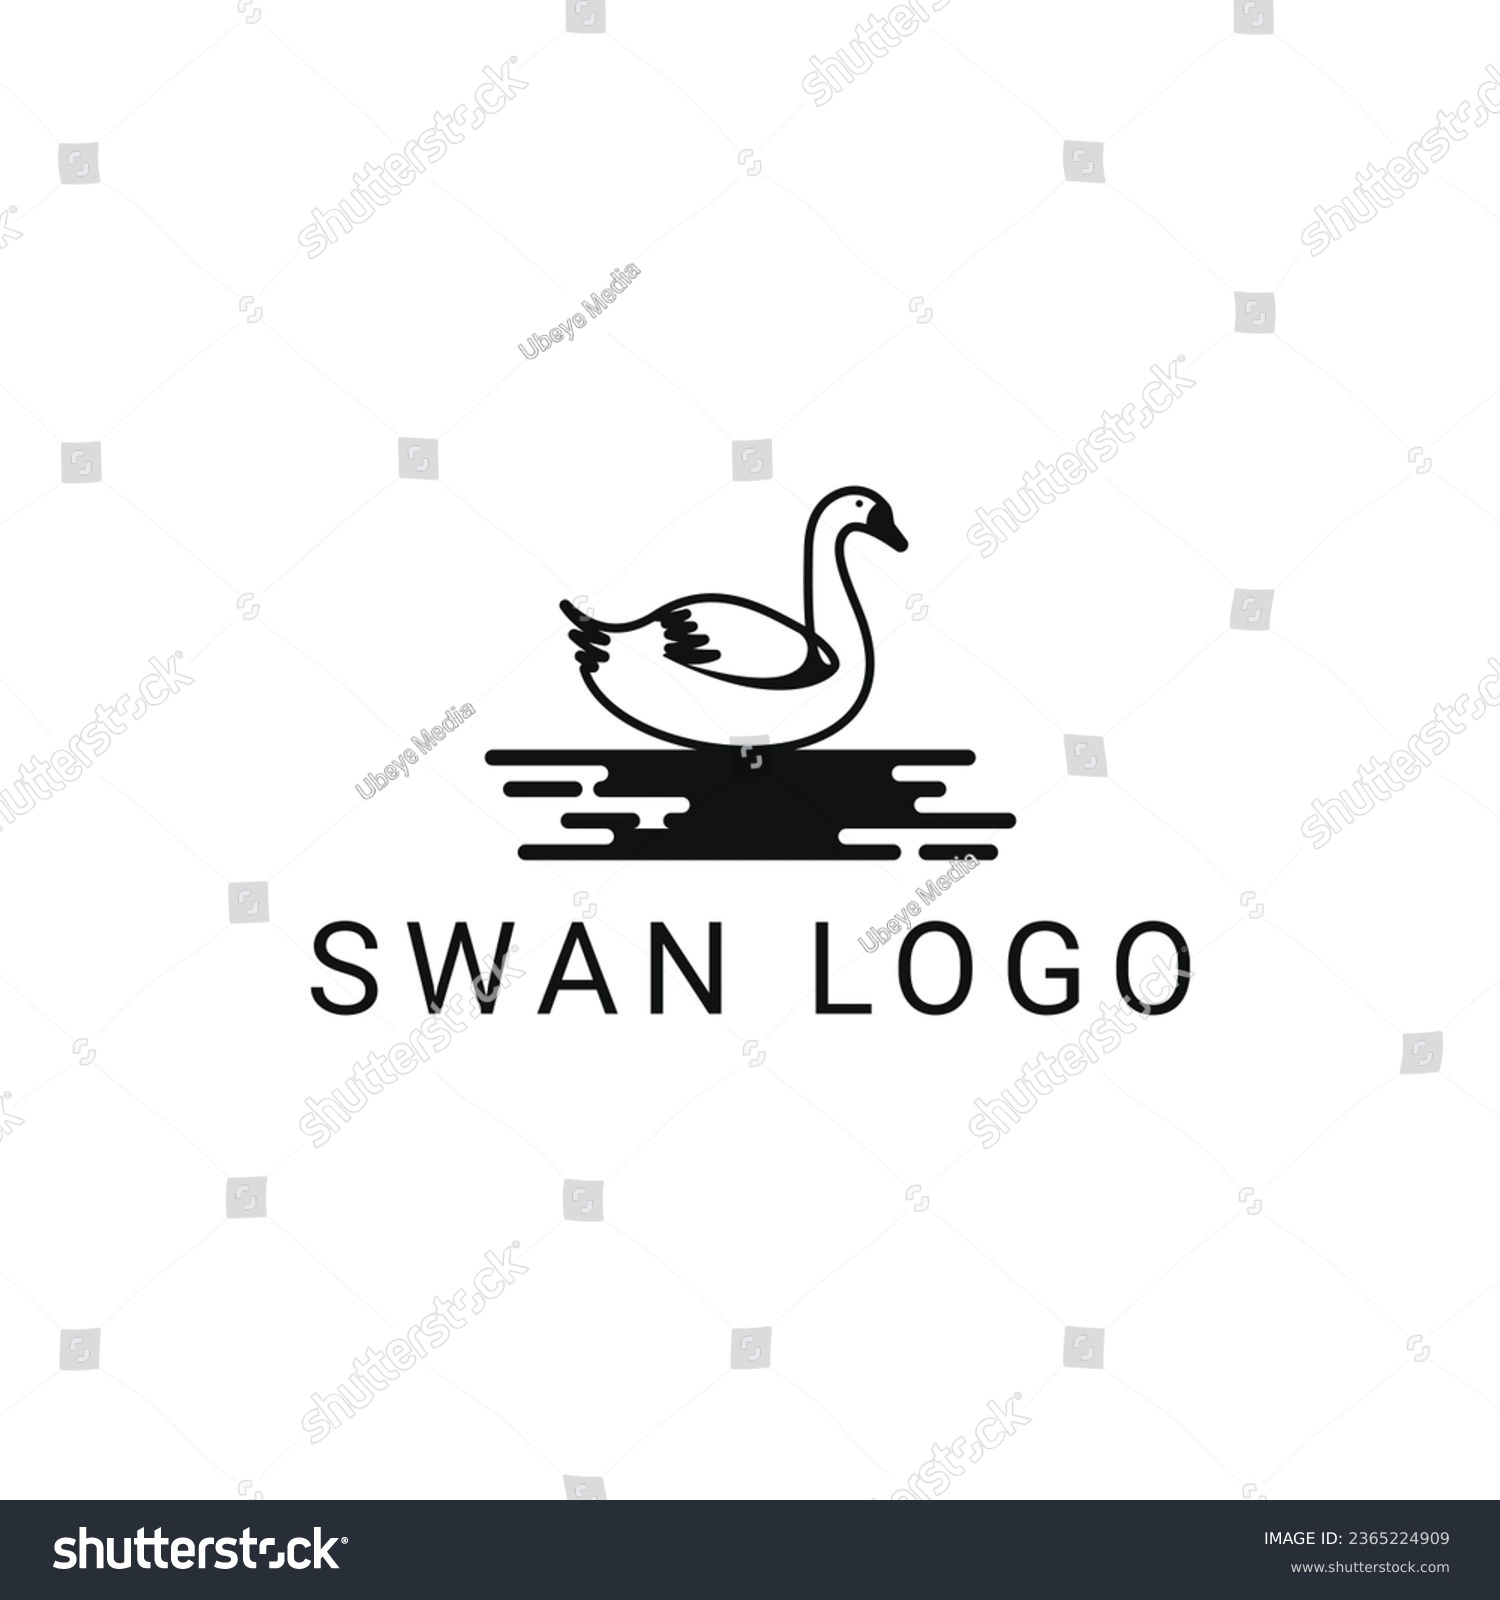 swan logo design idea with river #2365224909